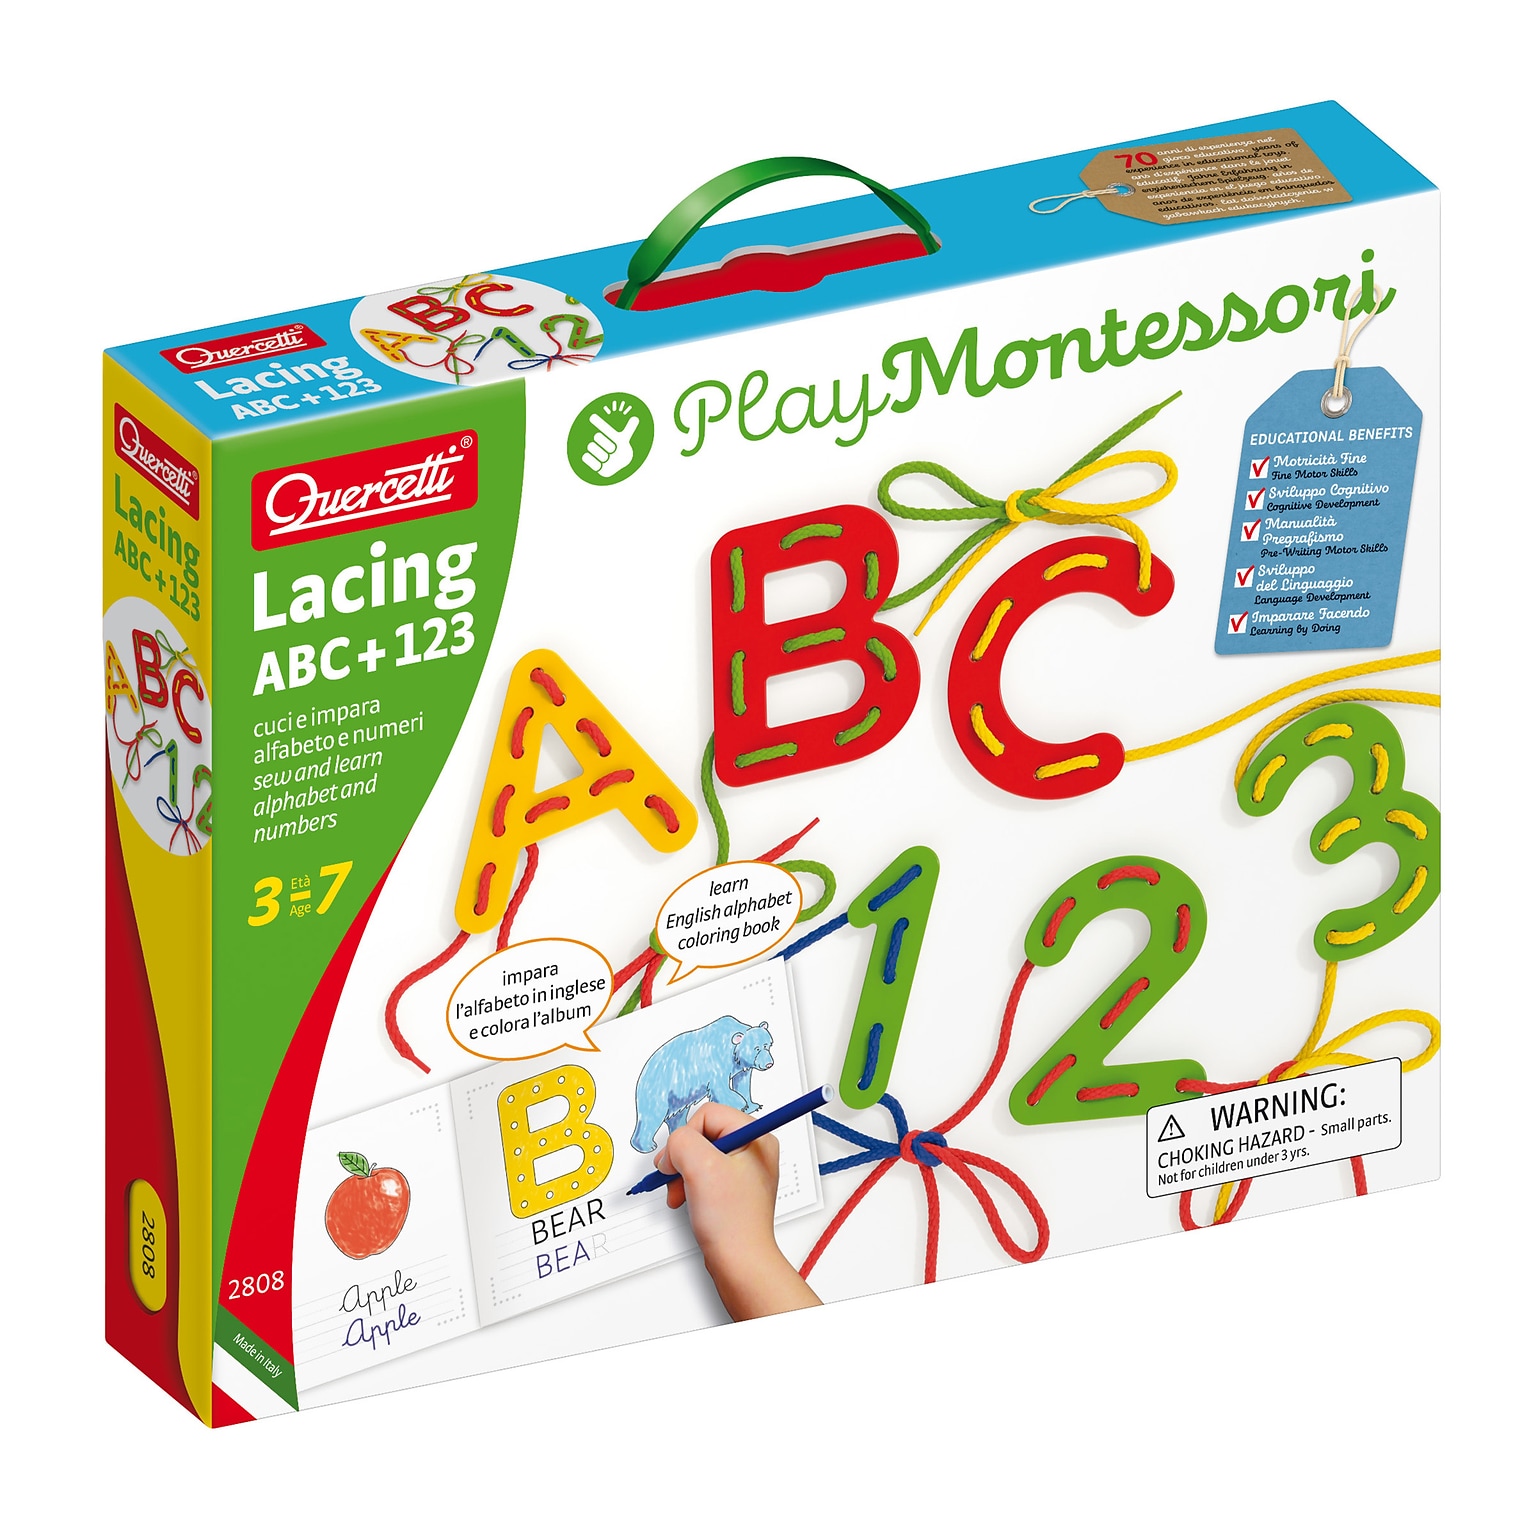 Quercetti Lacing ABC + 123 (QRC2808)